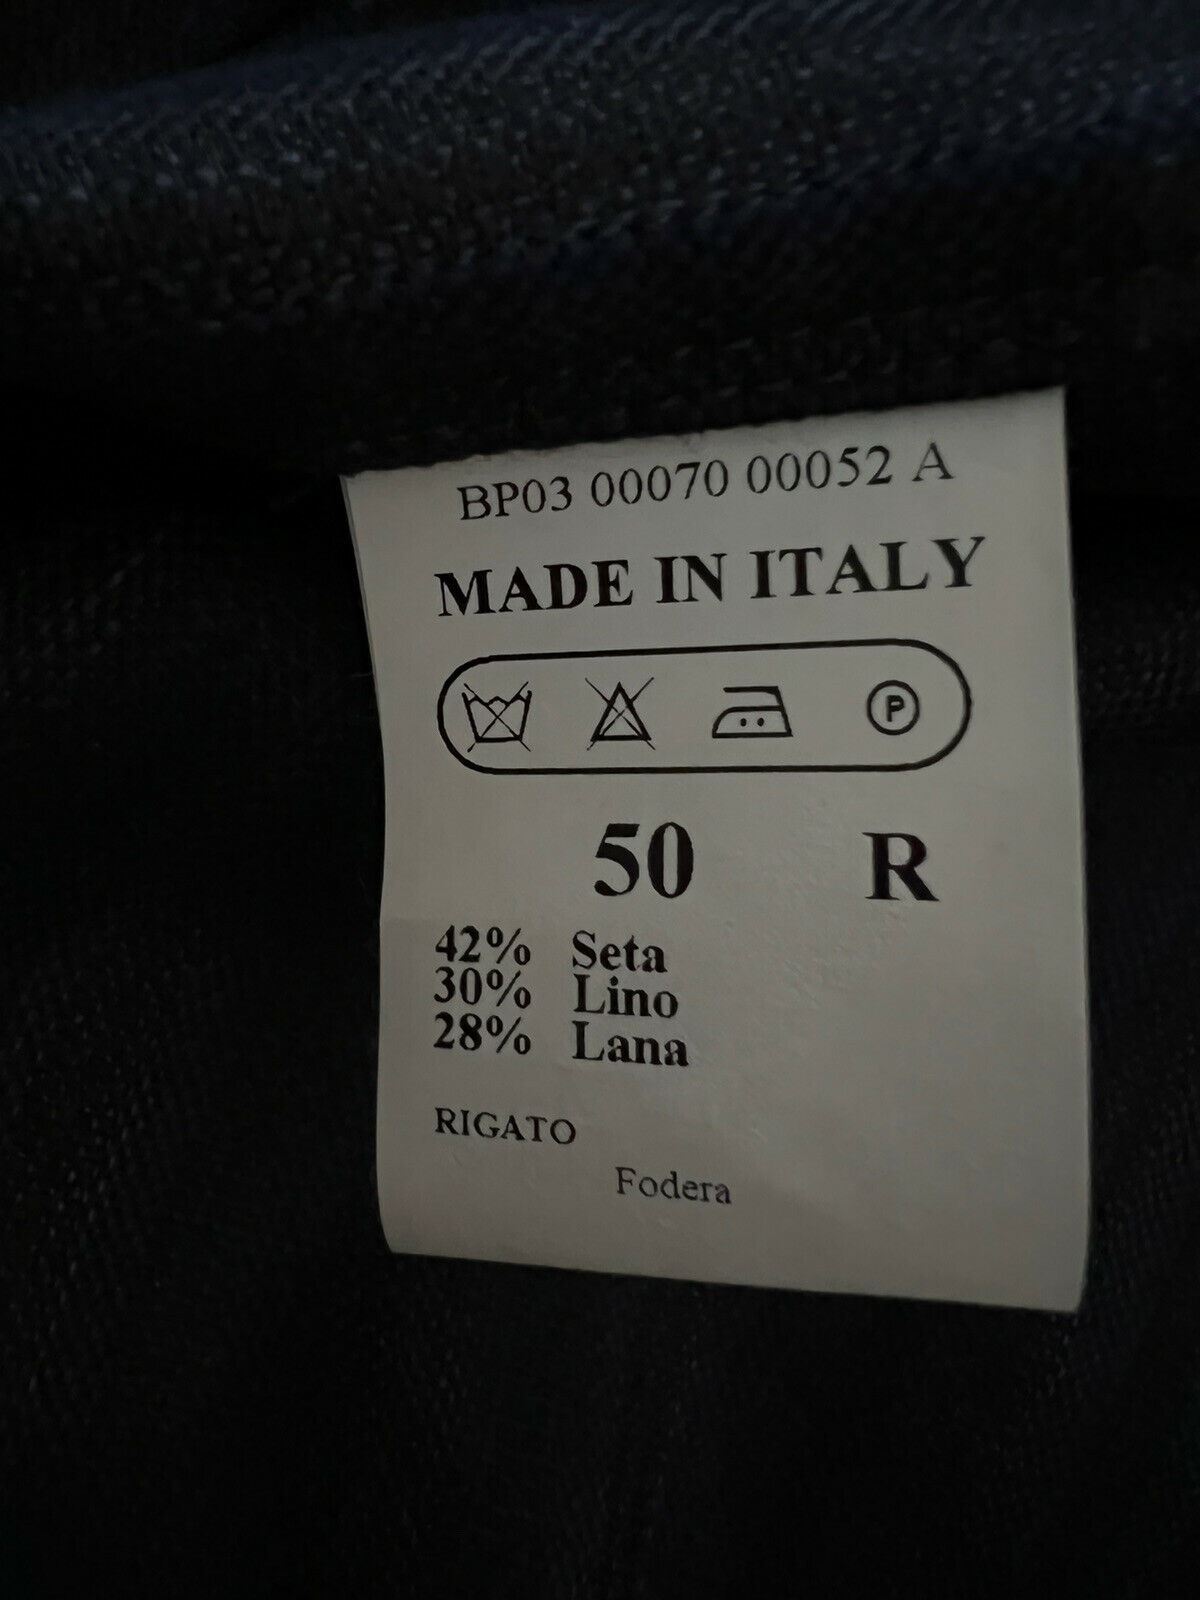 NWT $1795 EIDOS Napoli Sport Coat Jacket Silk/Wool Blue/Black 40R US (50R Eu) IT